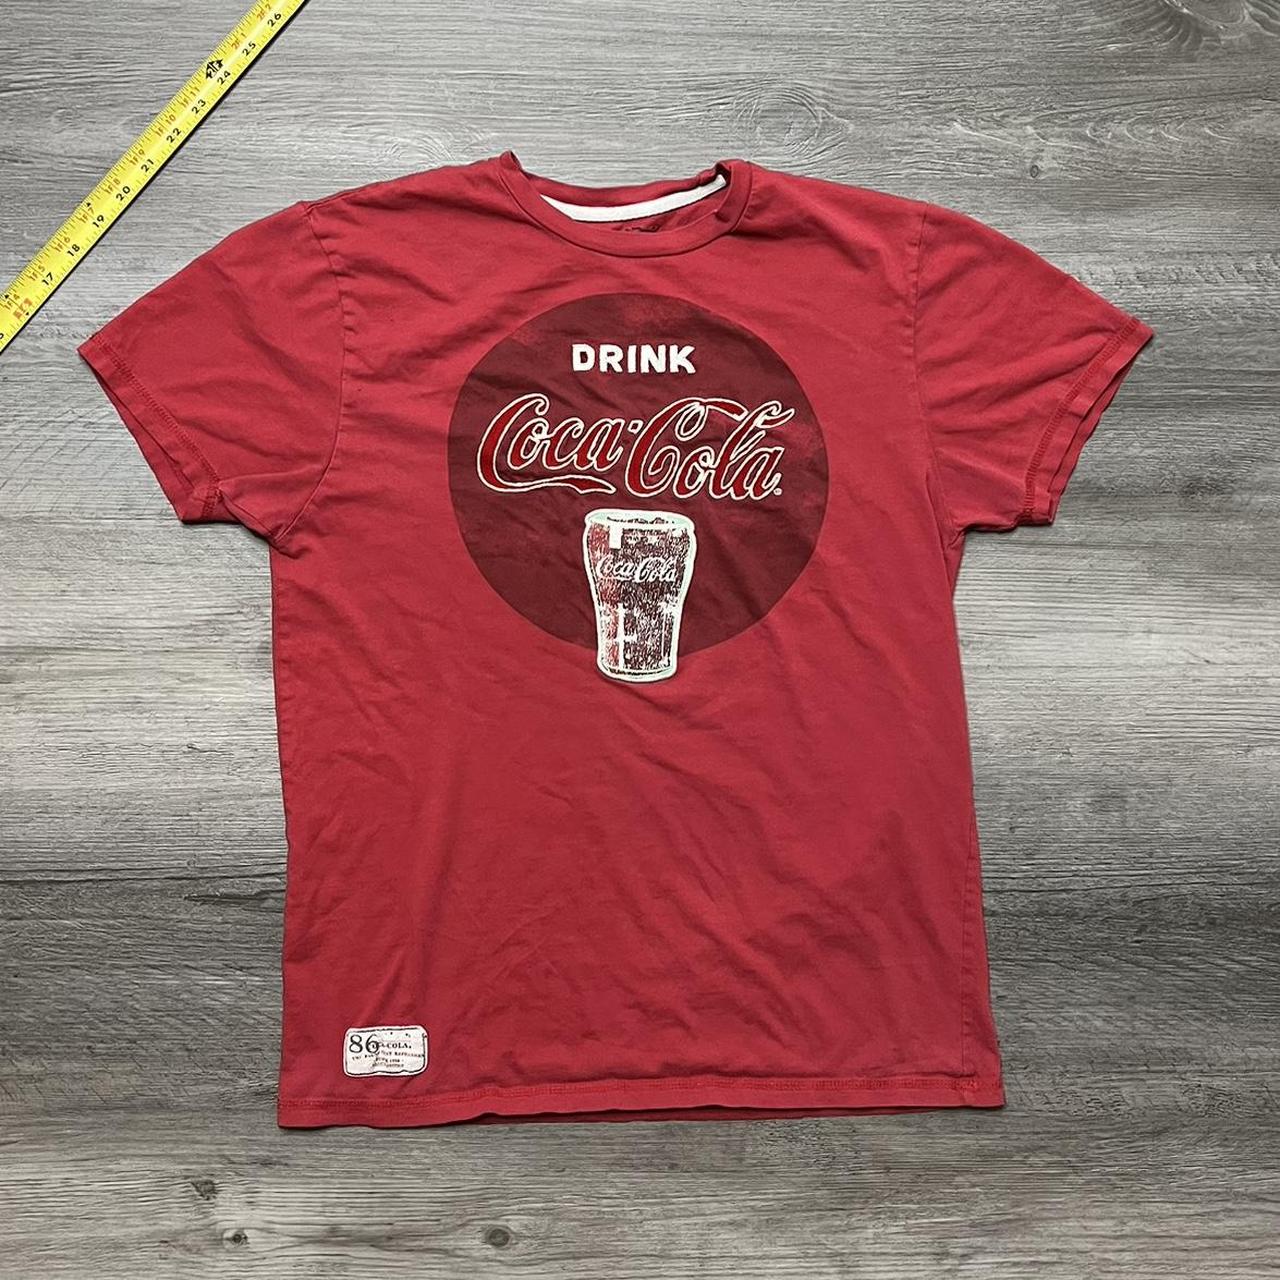 Vintage Style Red Coca Cola shirt - Depop